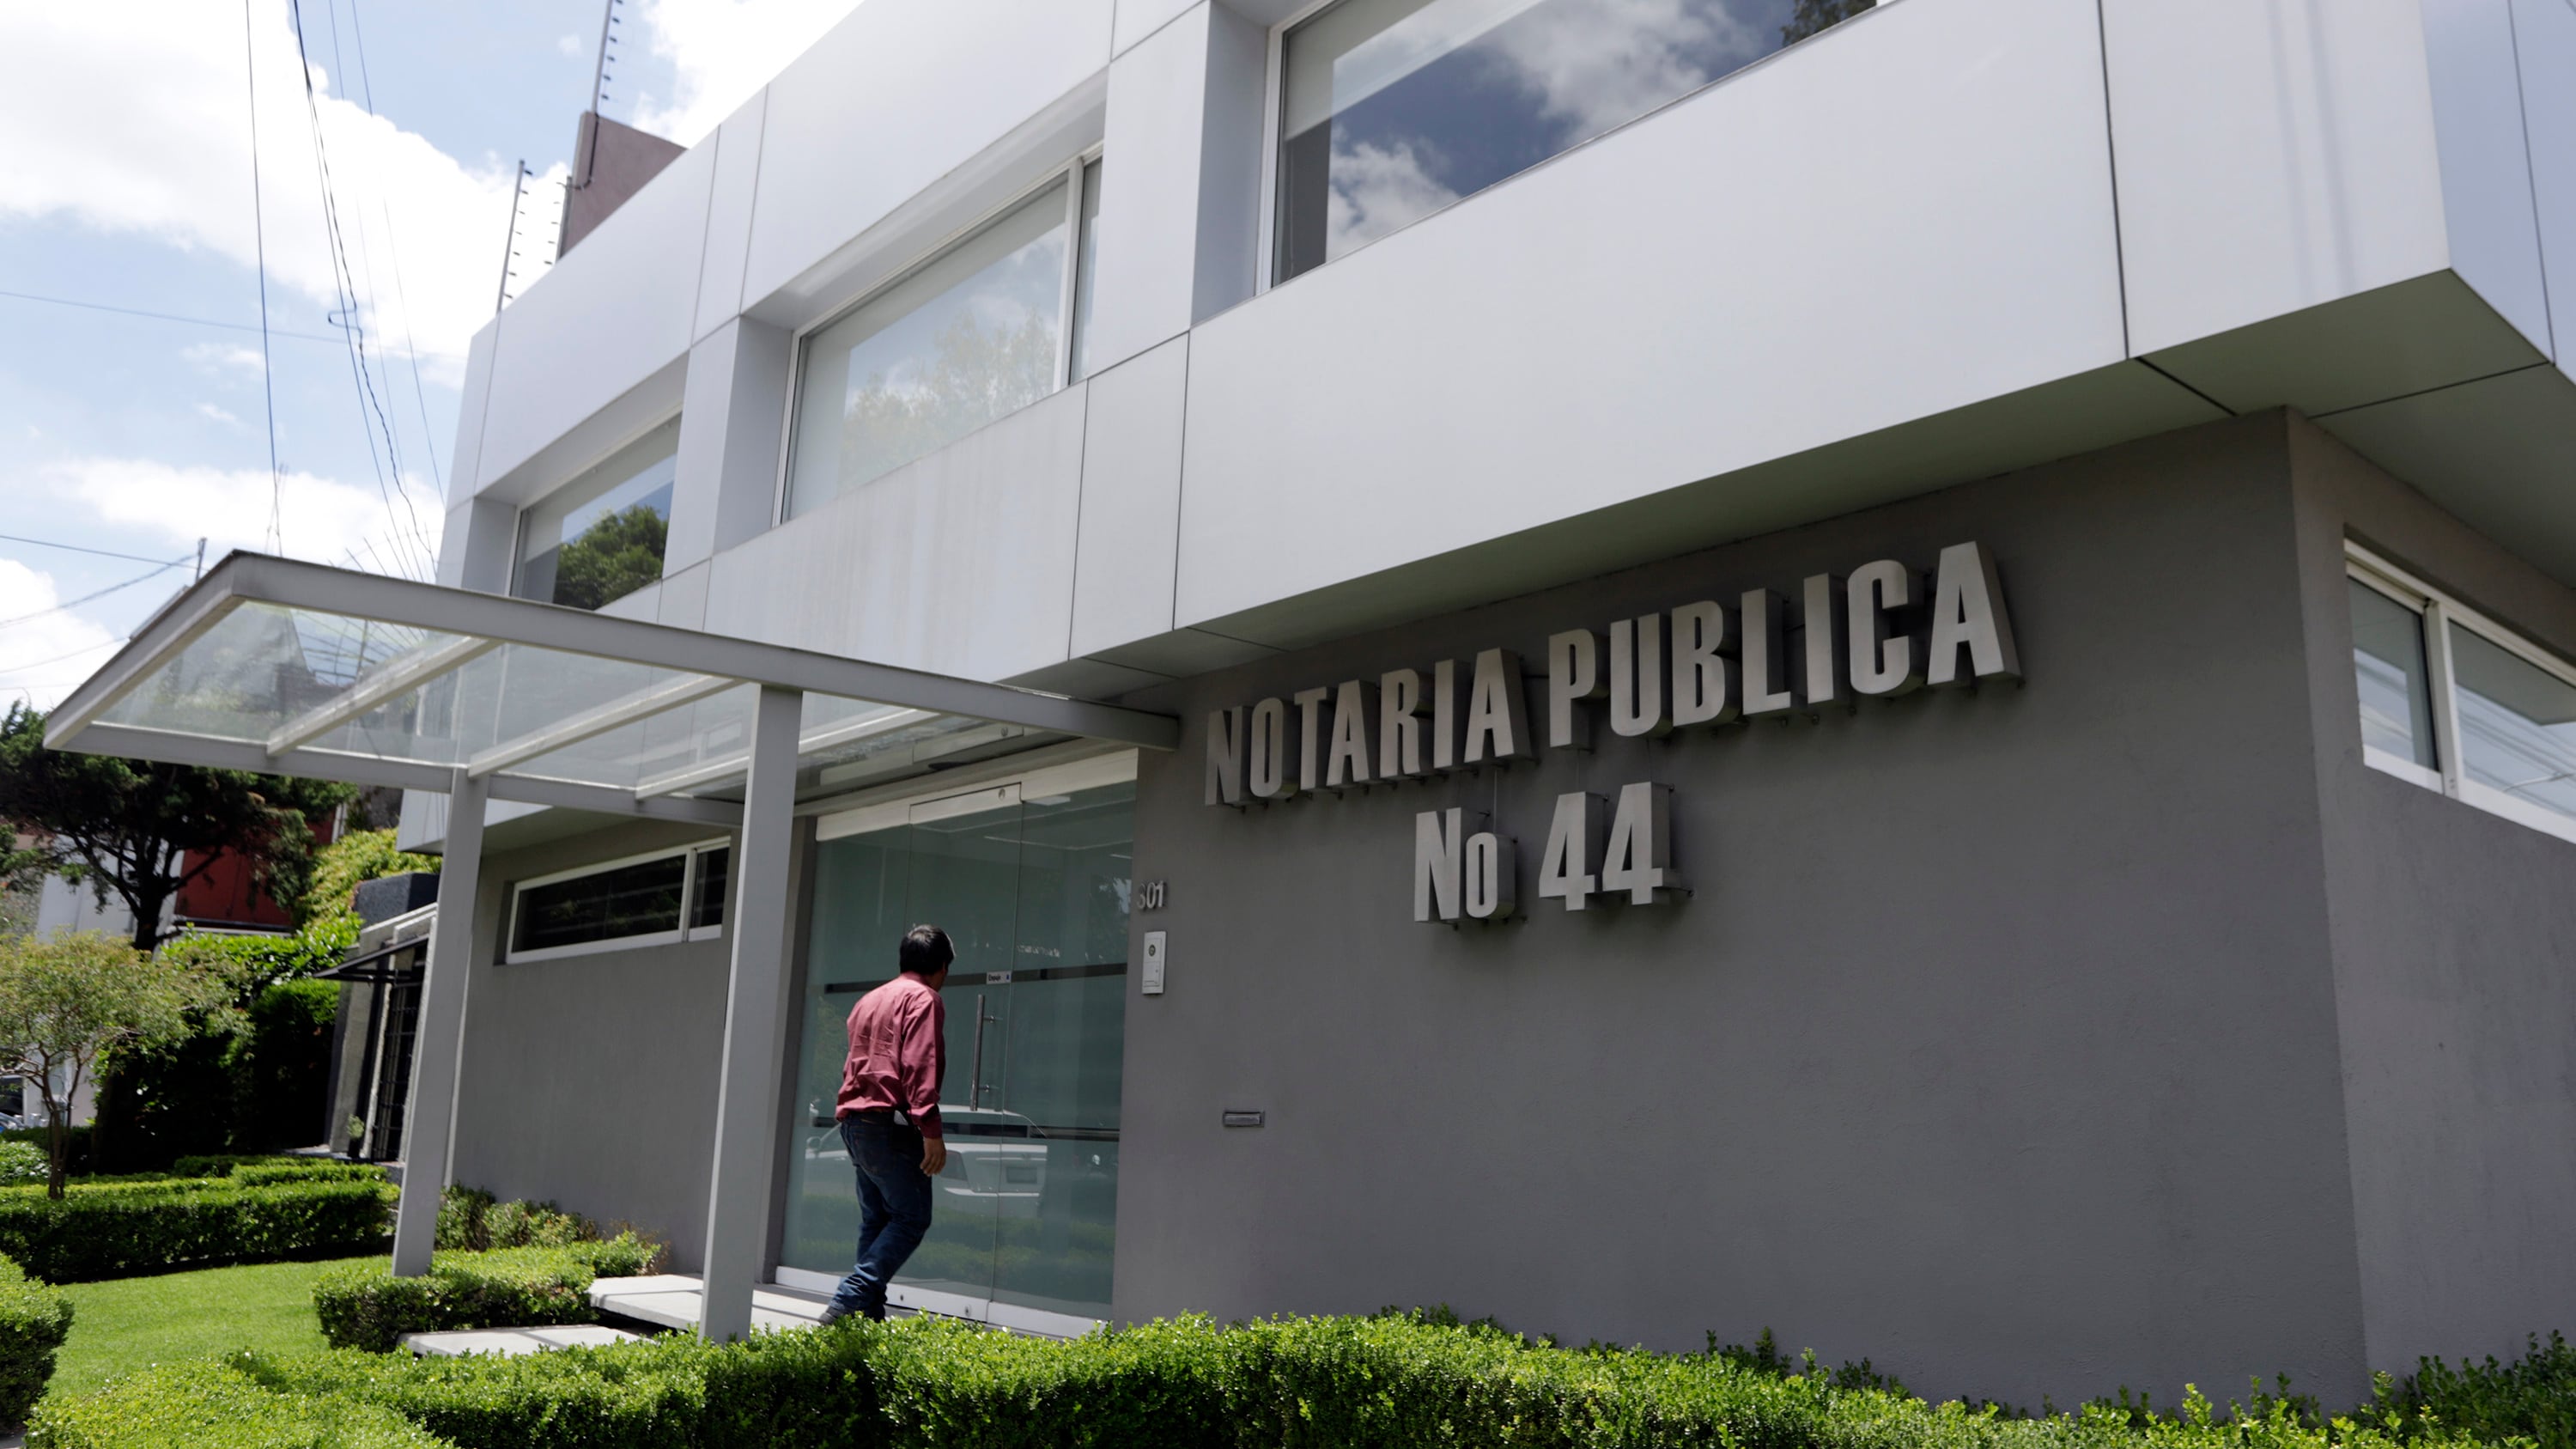 Notarios forman mafias para despojar propiedades: Barbosa